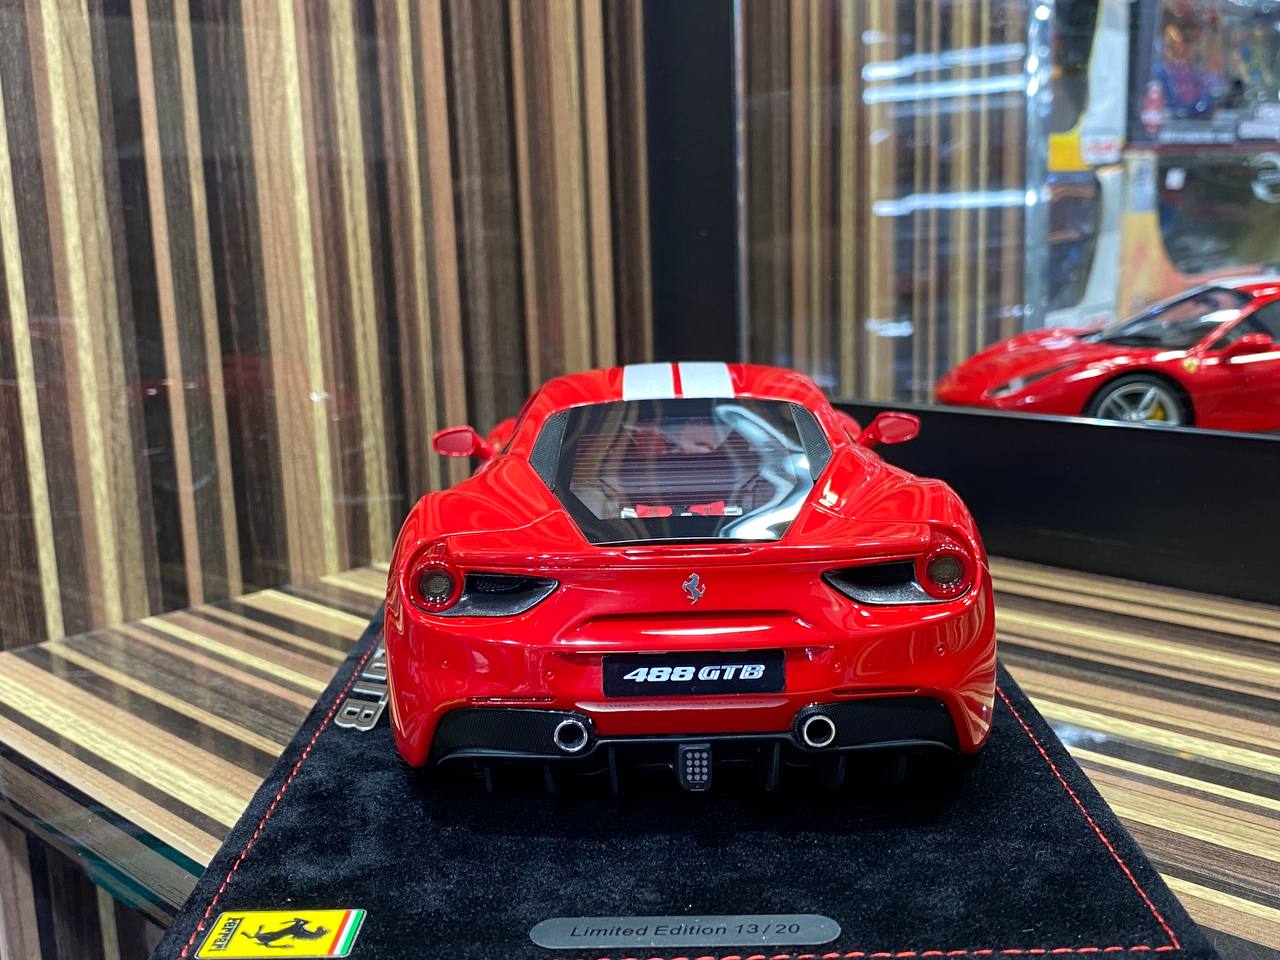 BBR Models Ferrari 488 GTB - 1/18 Resin Model, Red|Sold in Dturman.com Dubai UAE.